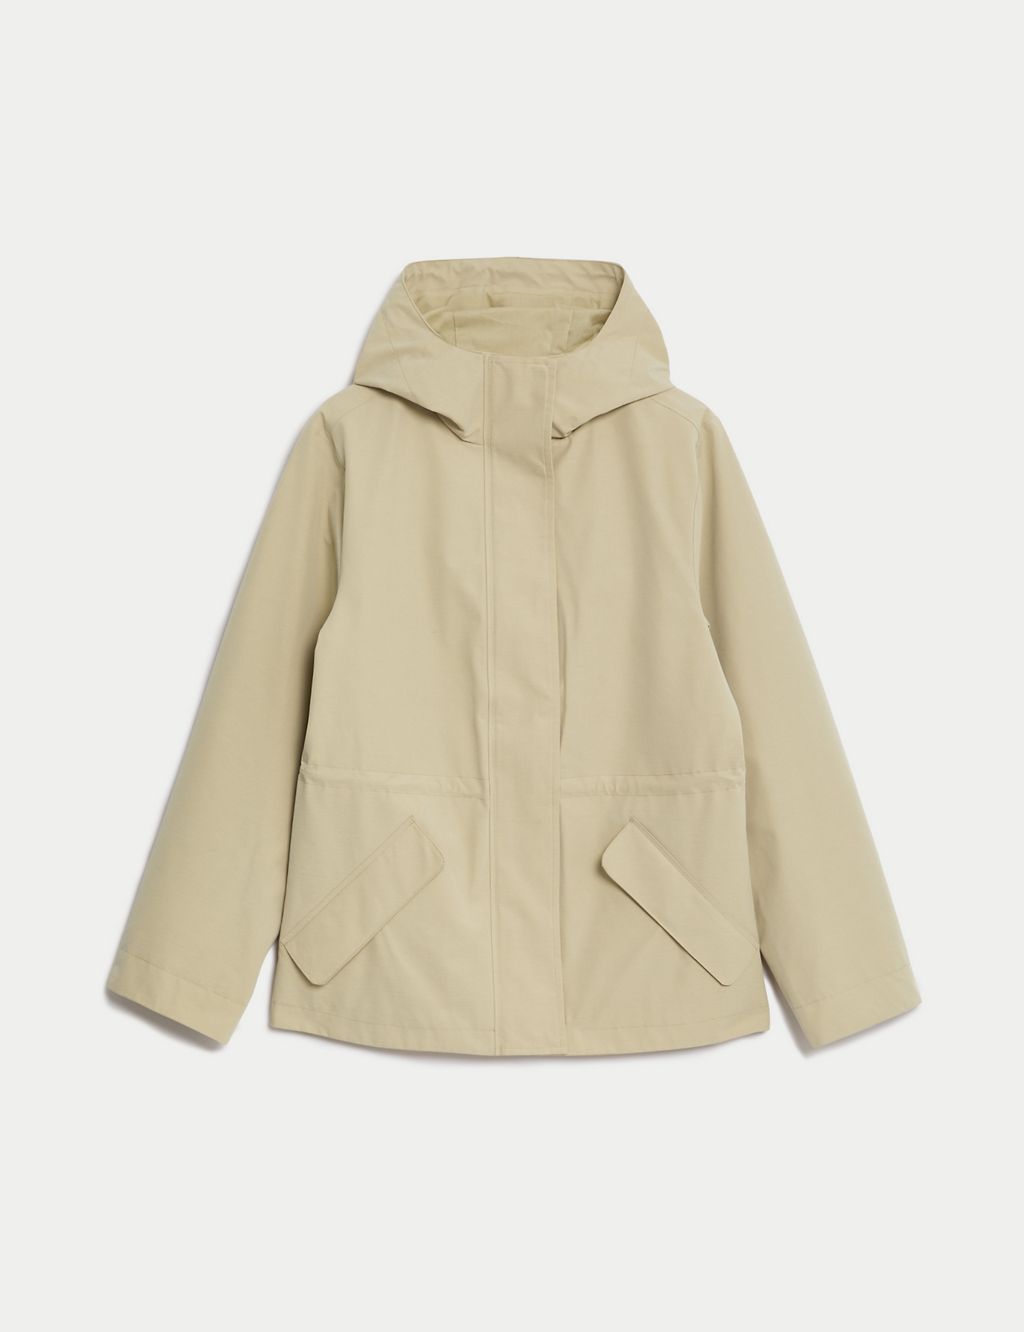 Stormwear™ Hooded Rain Jacket with Cotton 1 of 7